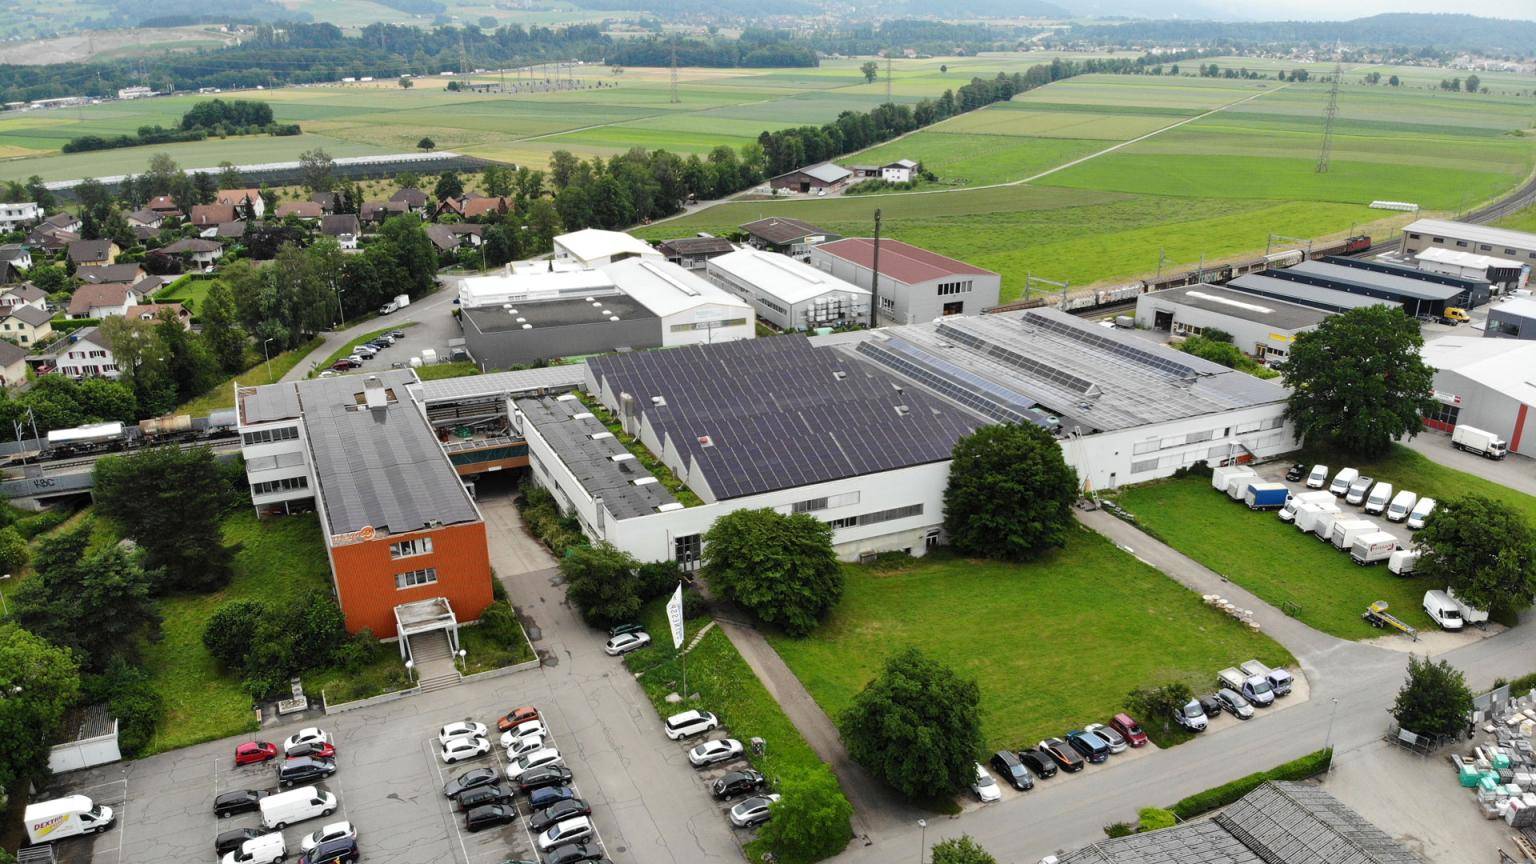 Deitingen, İsviçre'de 1.5MW pv sistemi